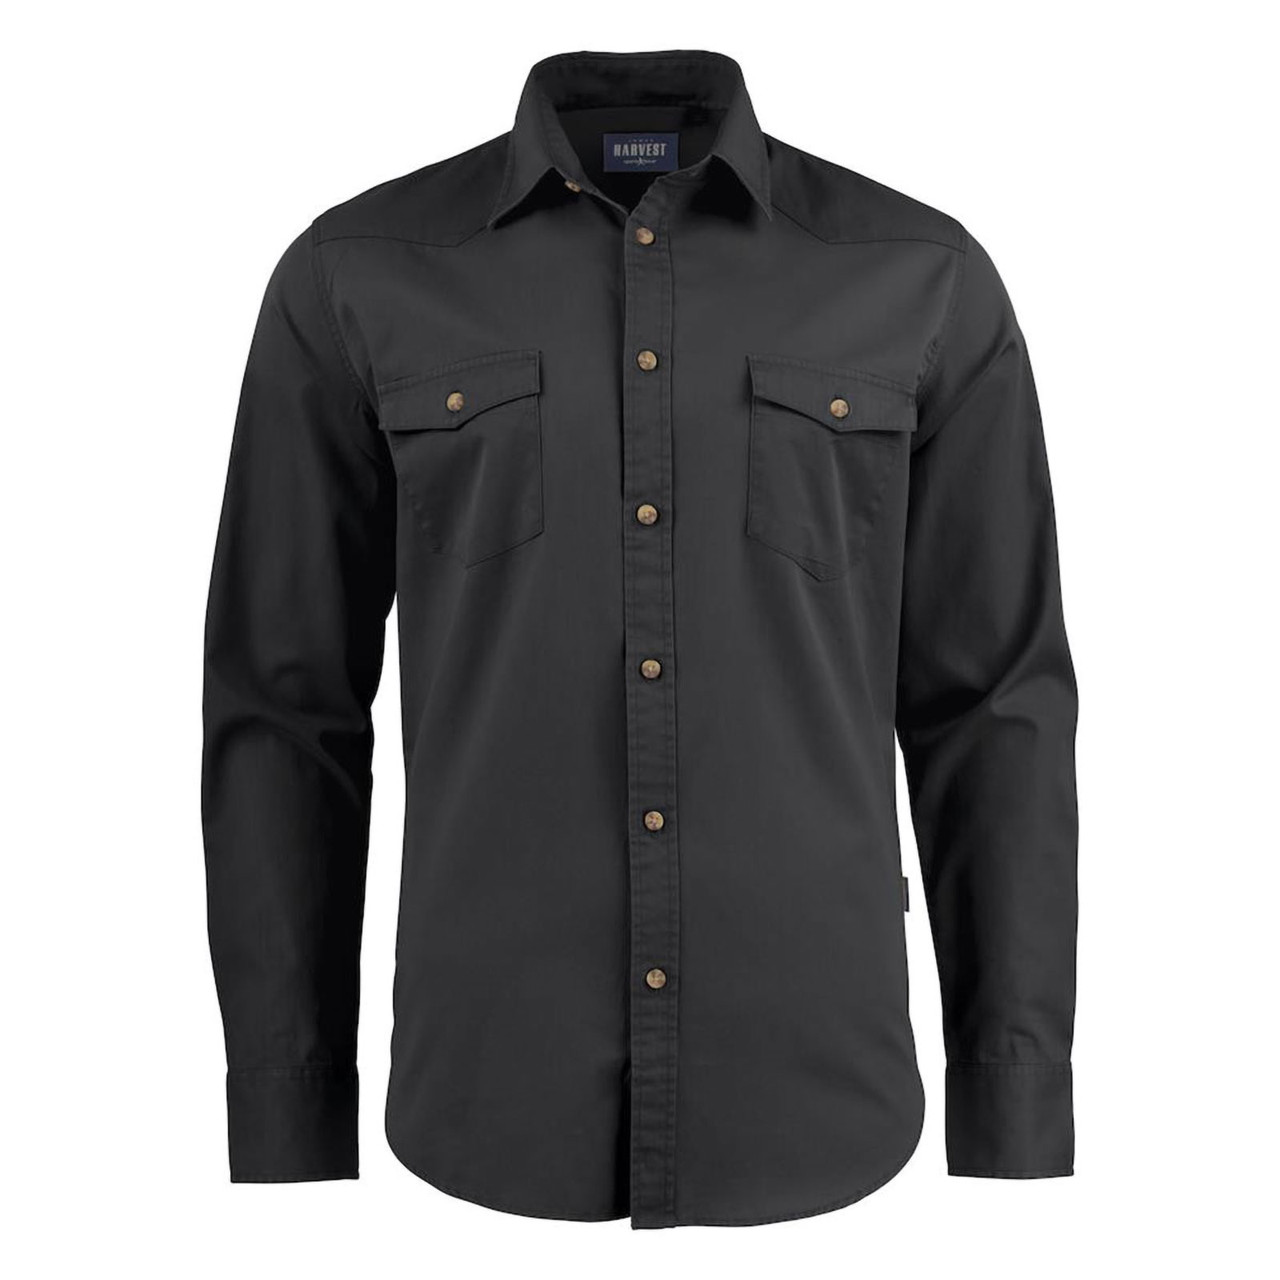 Unisex Twill Shirt 2 Chest Pockets | Shop Blank Clothing Wholesale Online